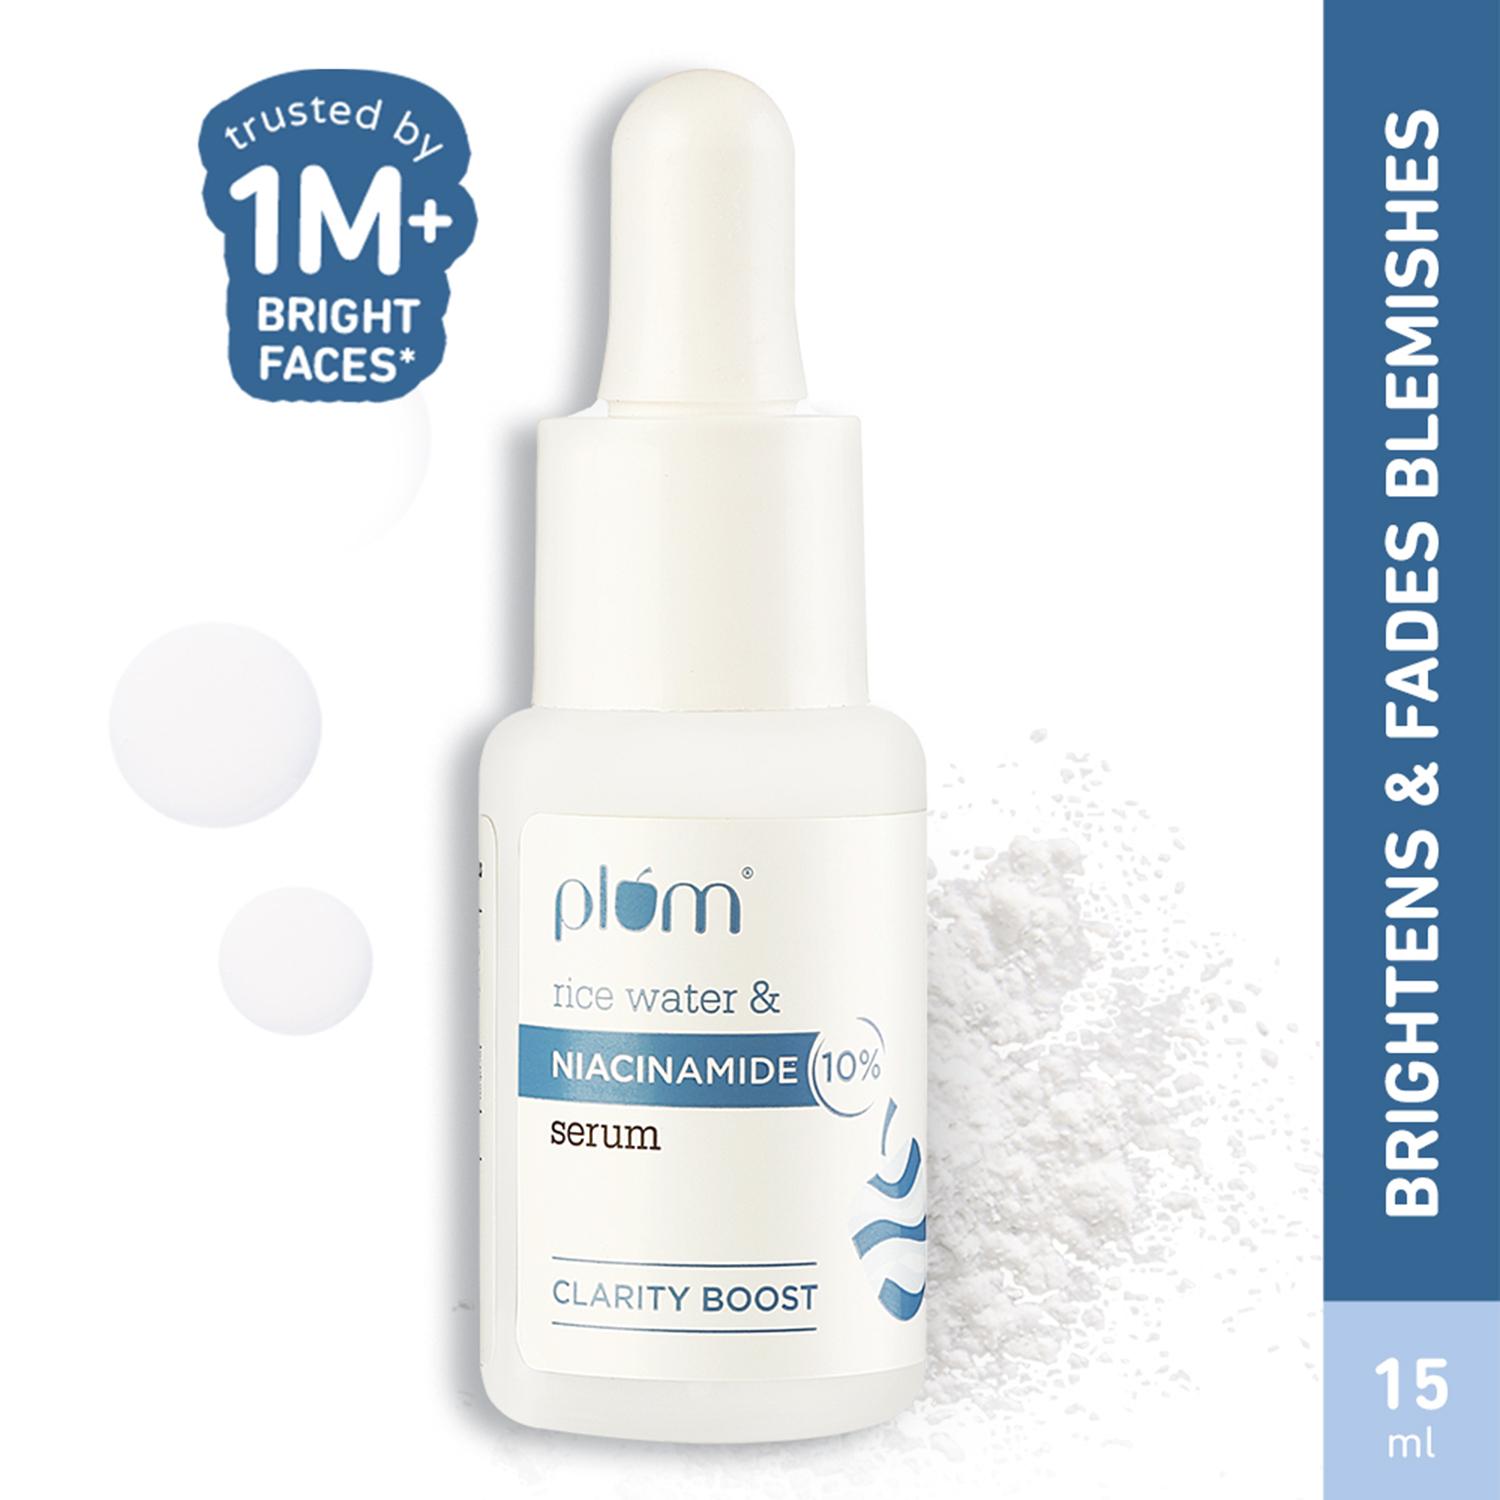 Plum | Plum 10% Niacinamide Brightening Face Serum, Rice Water & Ferment-Fades Blemishes & Acne Mark (15ml)